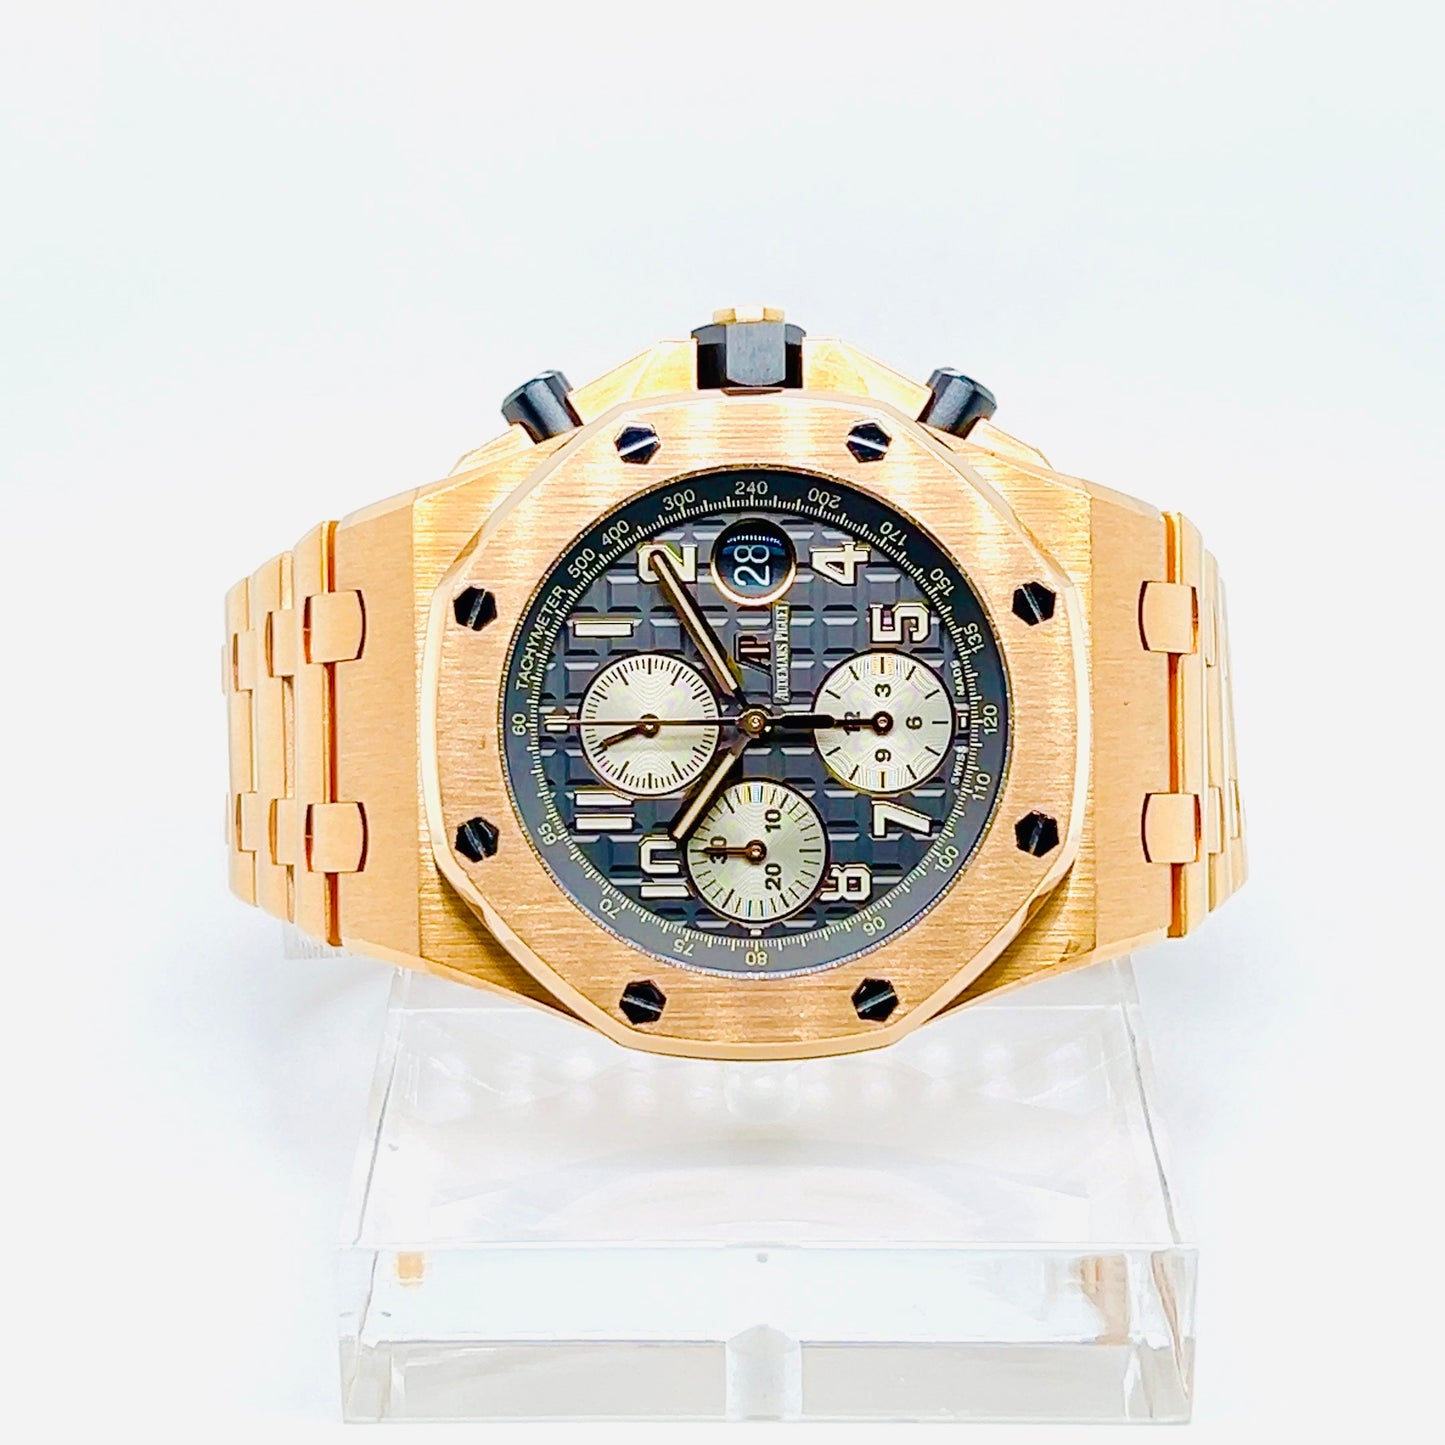 Audemars Piguet Royal Oak Offshore Selfwinding Chronograph Watch Model #26470OR.OO.1000OR.02